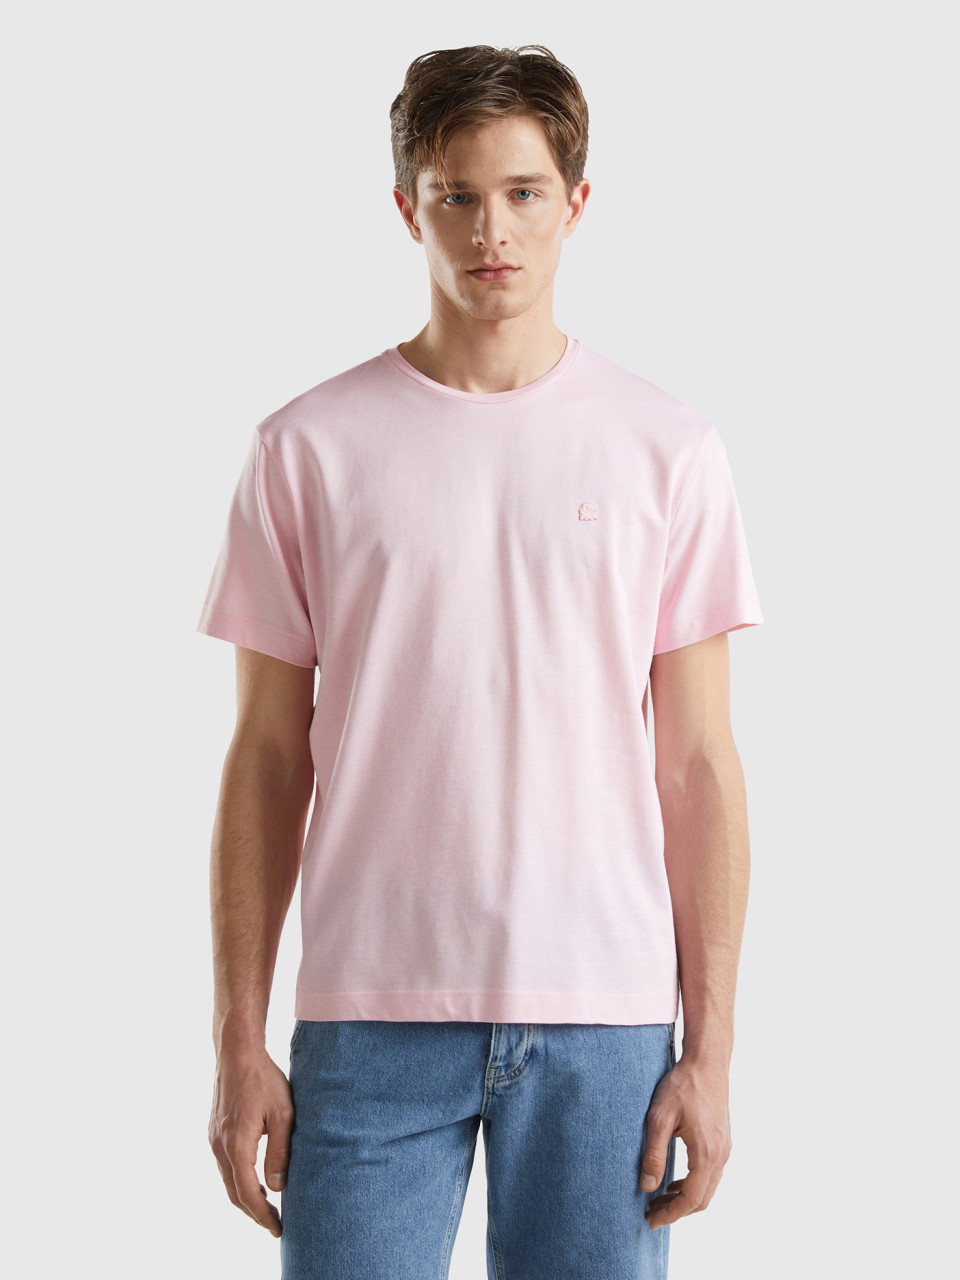 Benetton, T-shirt In Micro Pique, Pink, Men